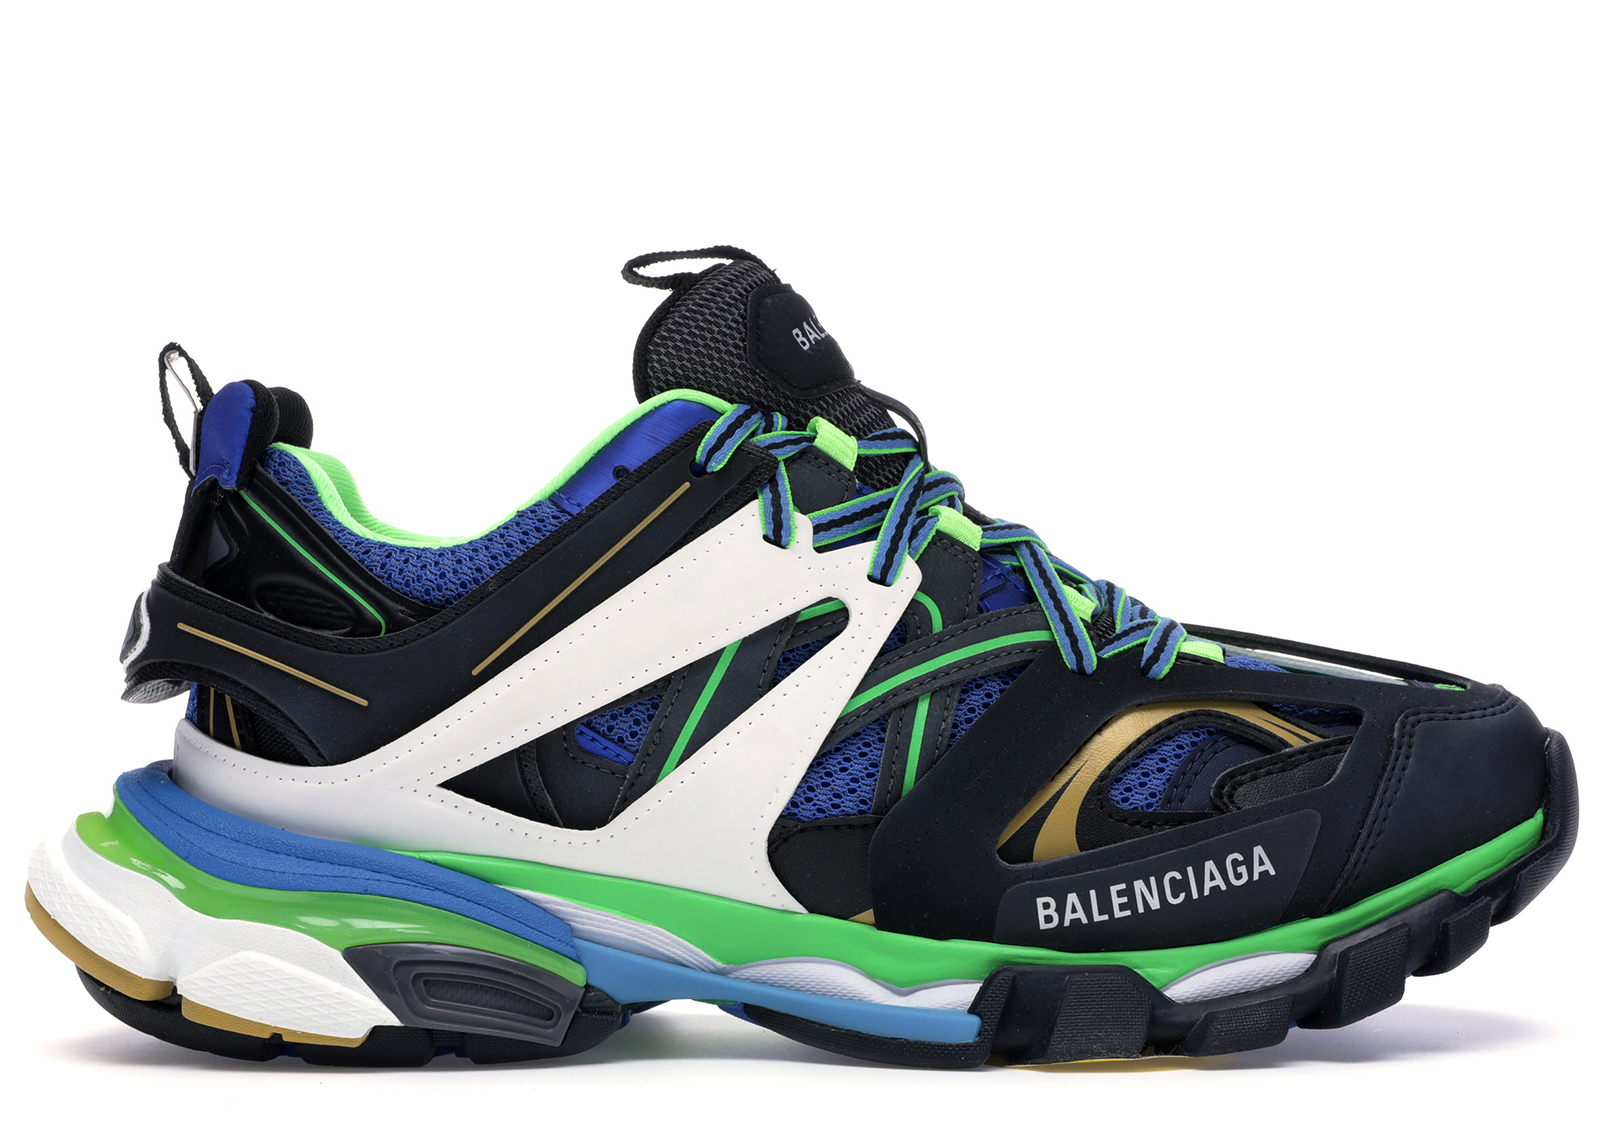 BuyGB Balenciaga Shoes & Deadstock SneakersGB